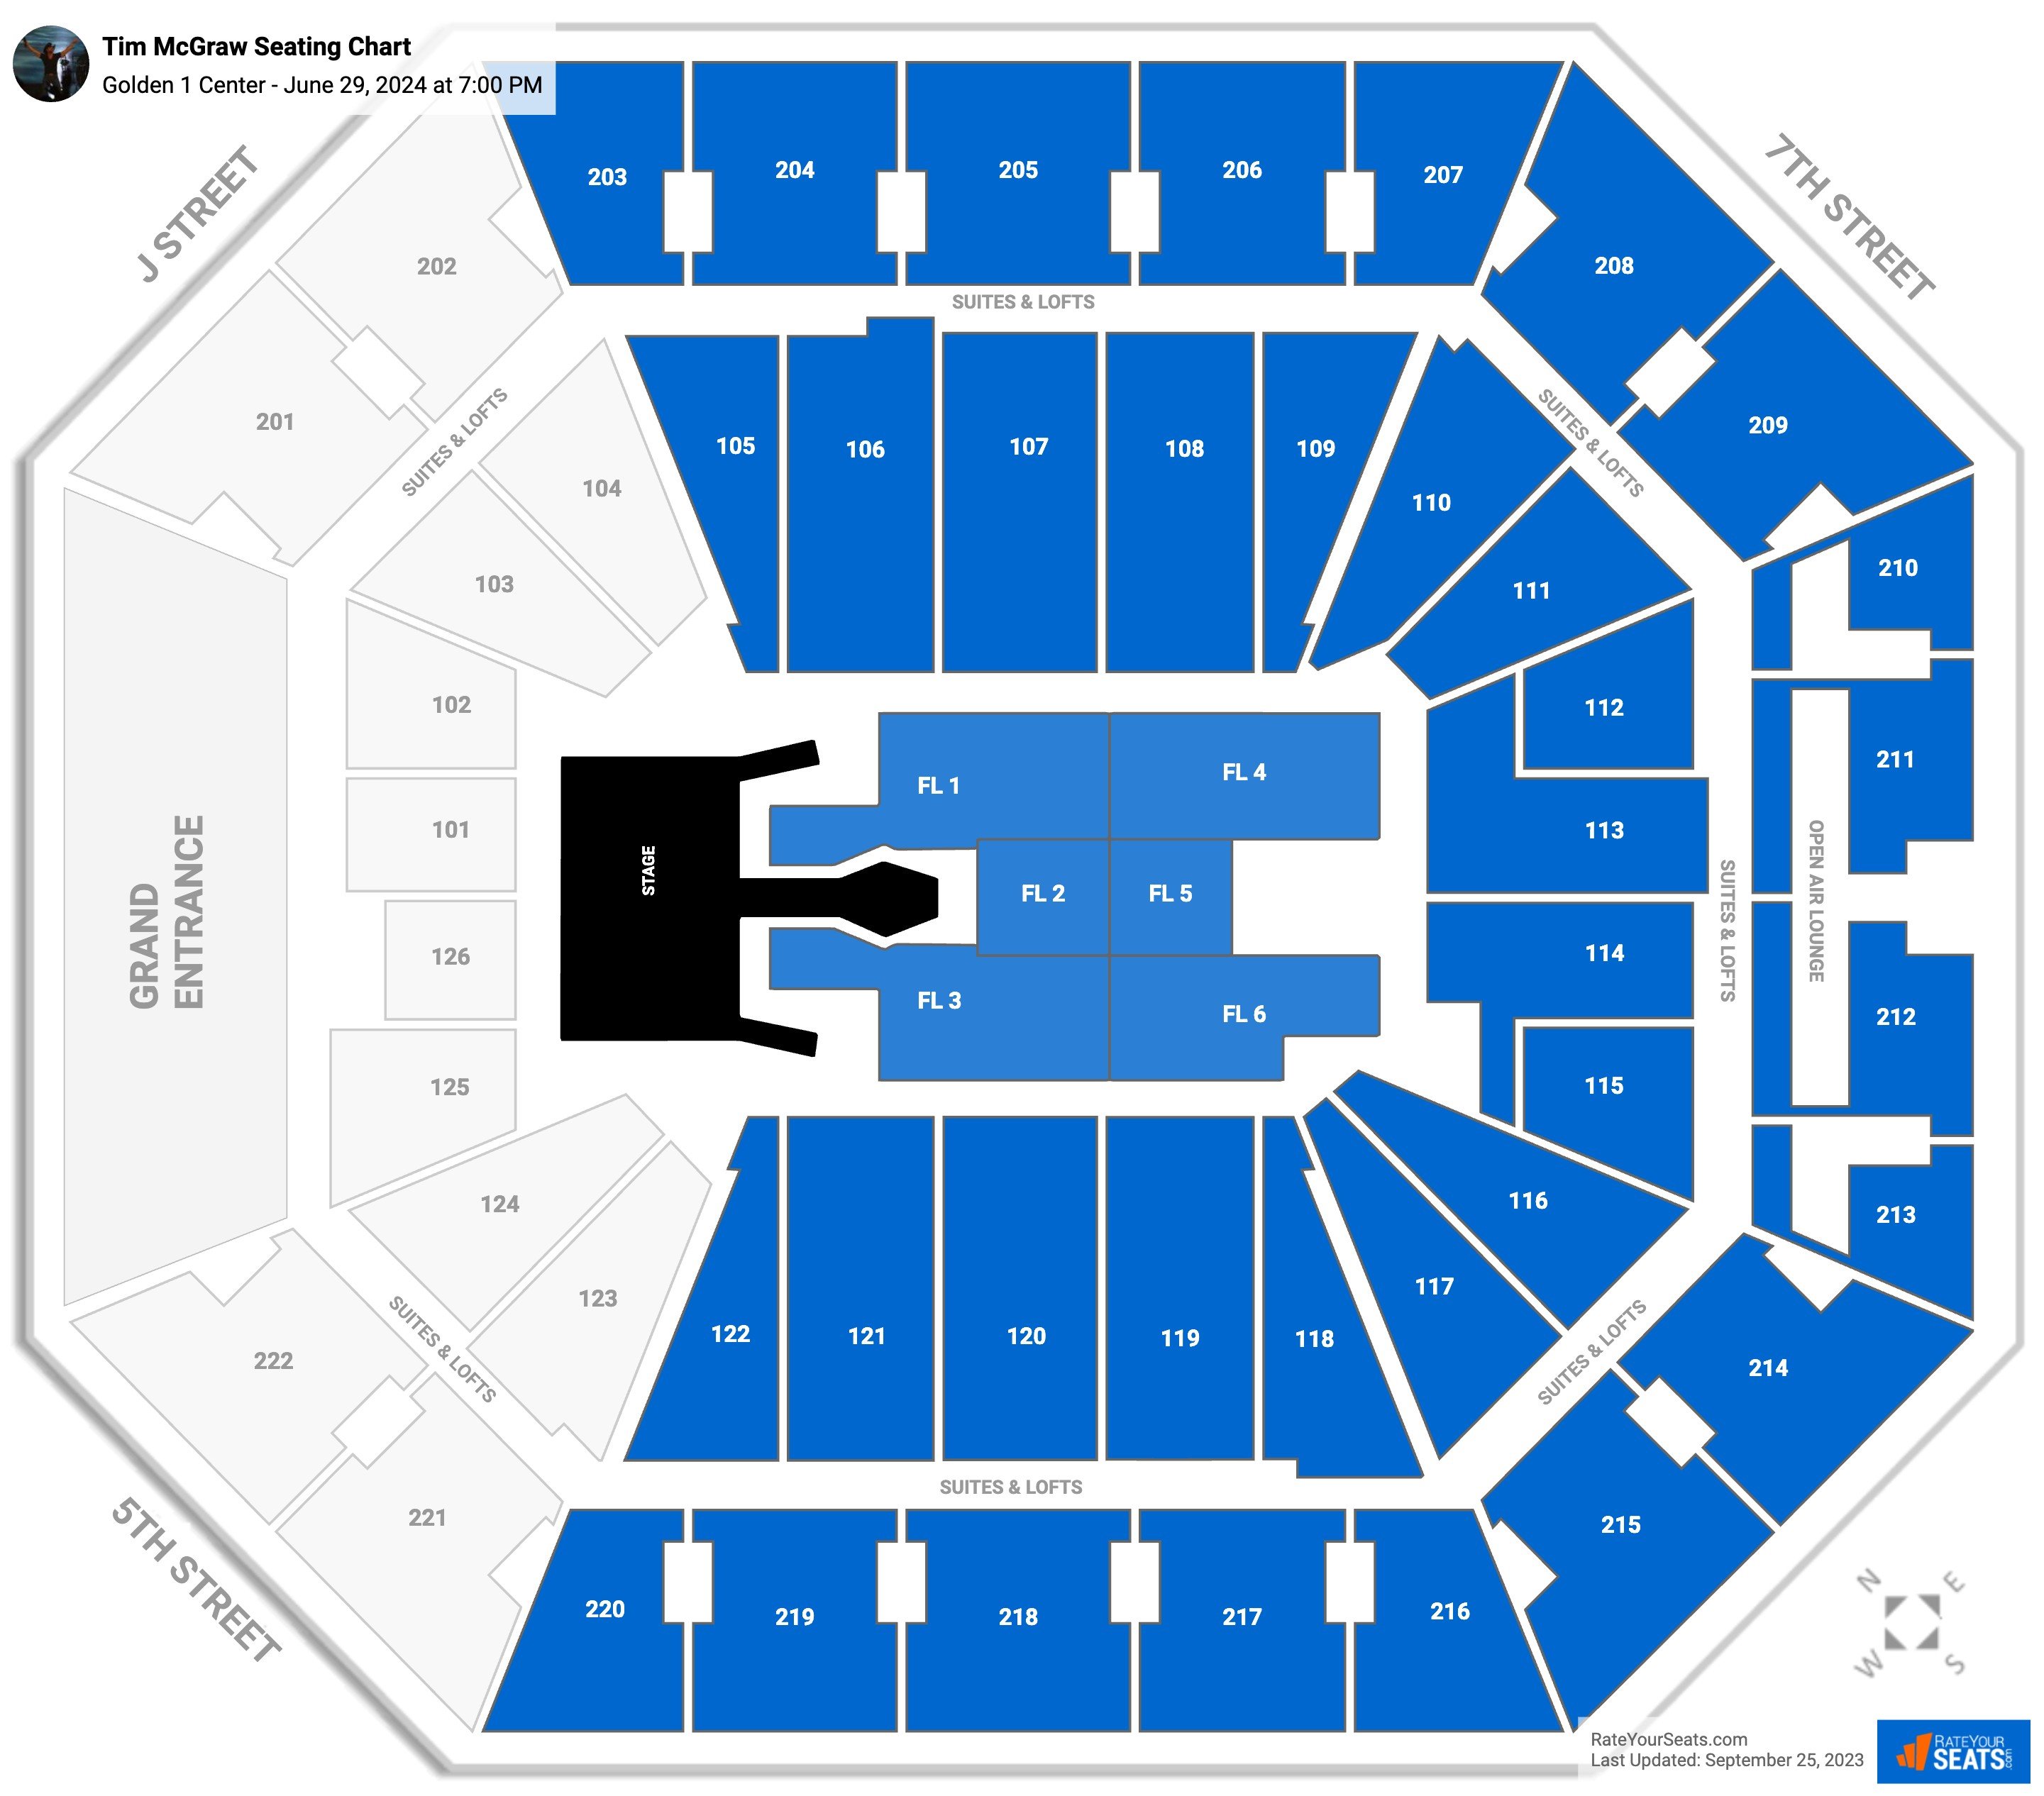 Golden 1 Center Concert Seating Chart Rateyourseats Com